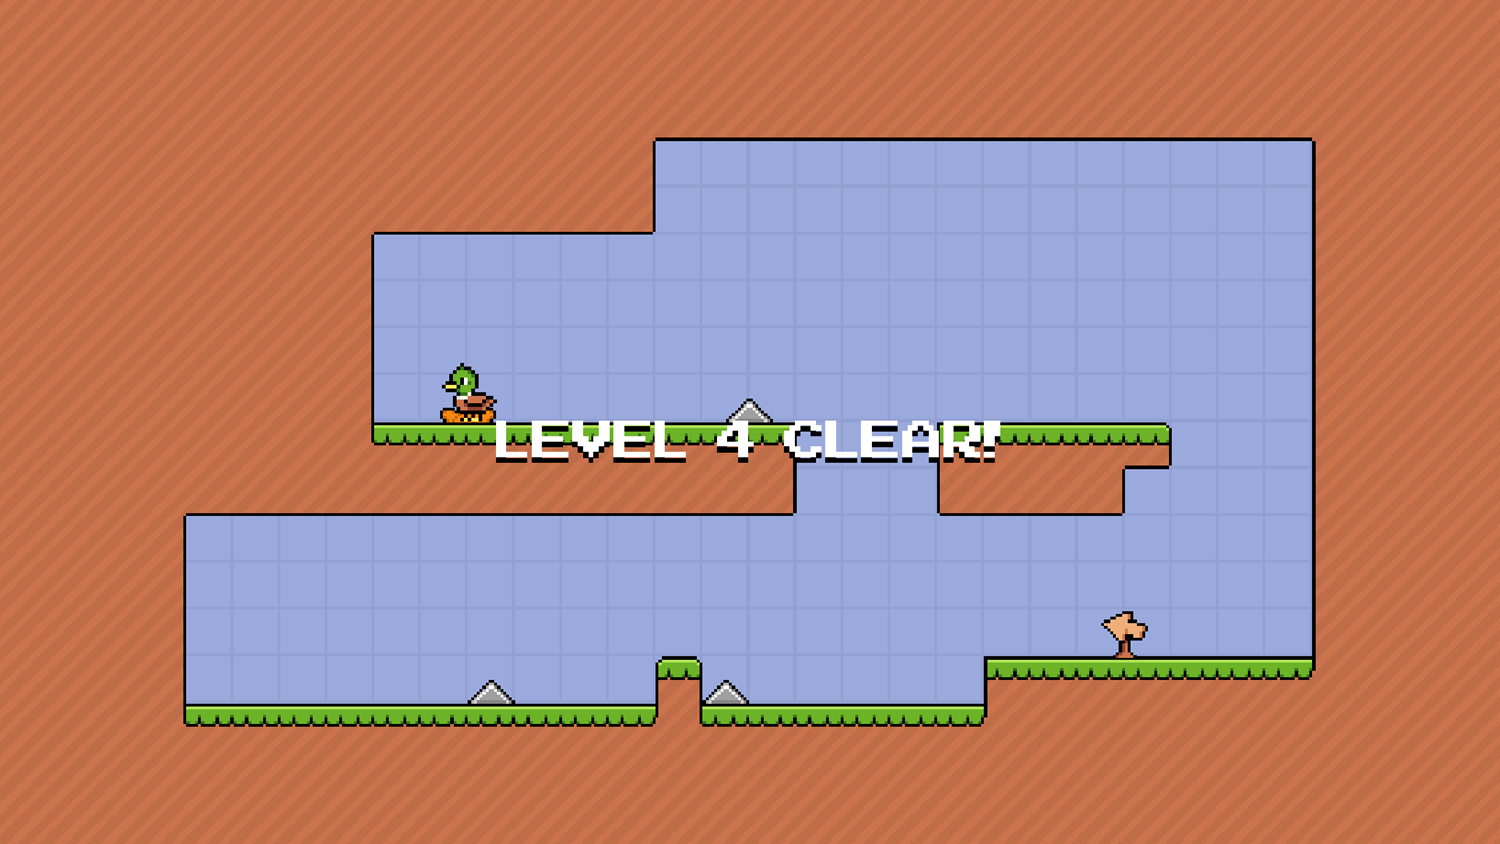 Duck Auto Run Game Level Complete Screen Screenshot.